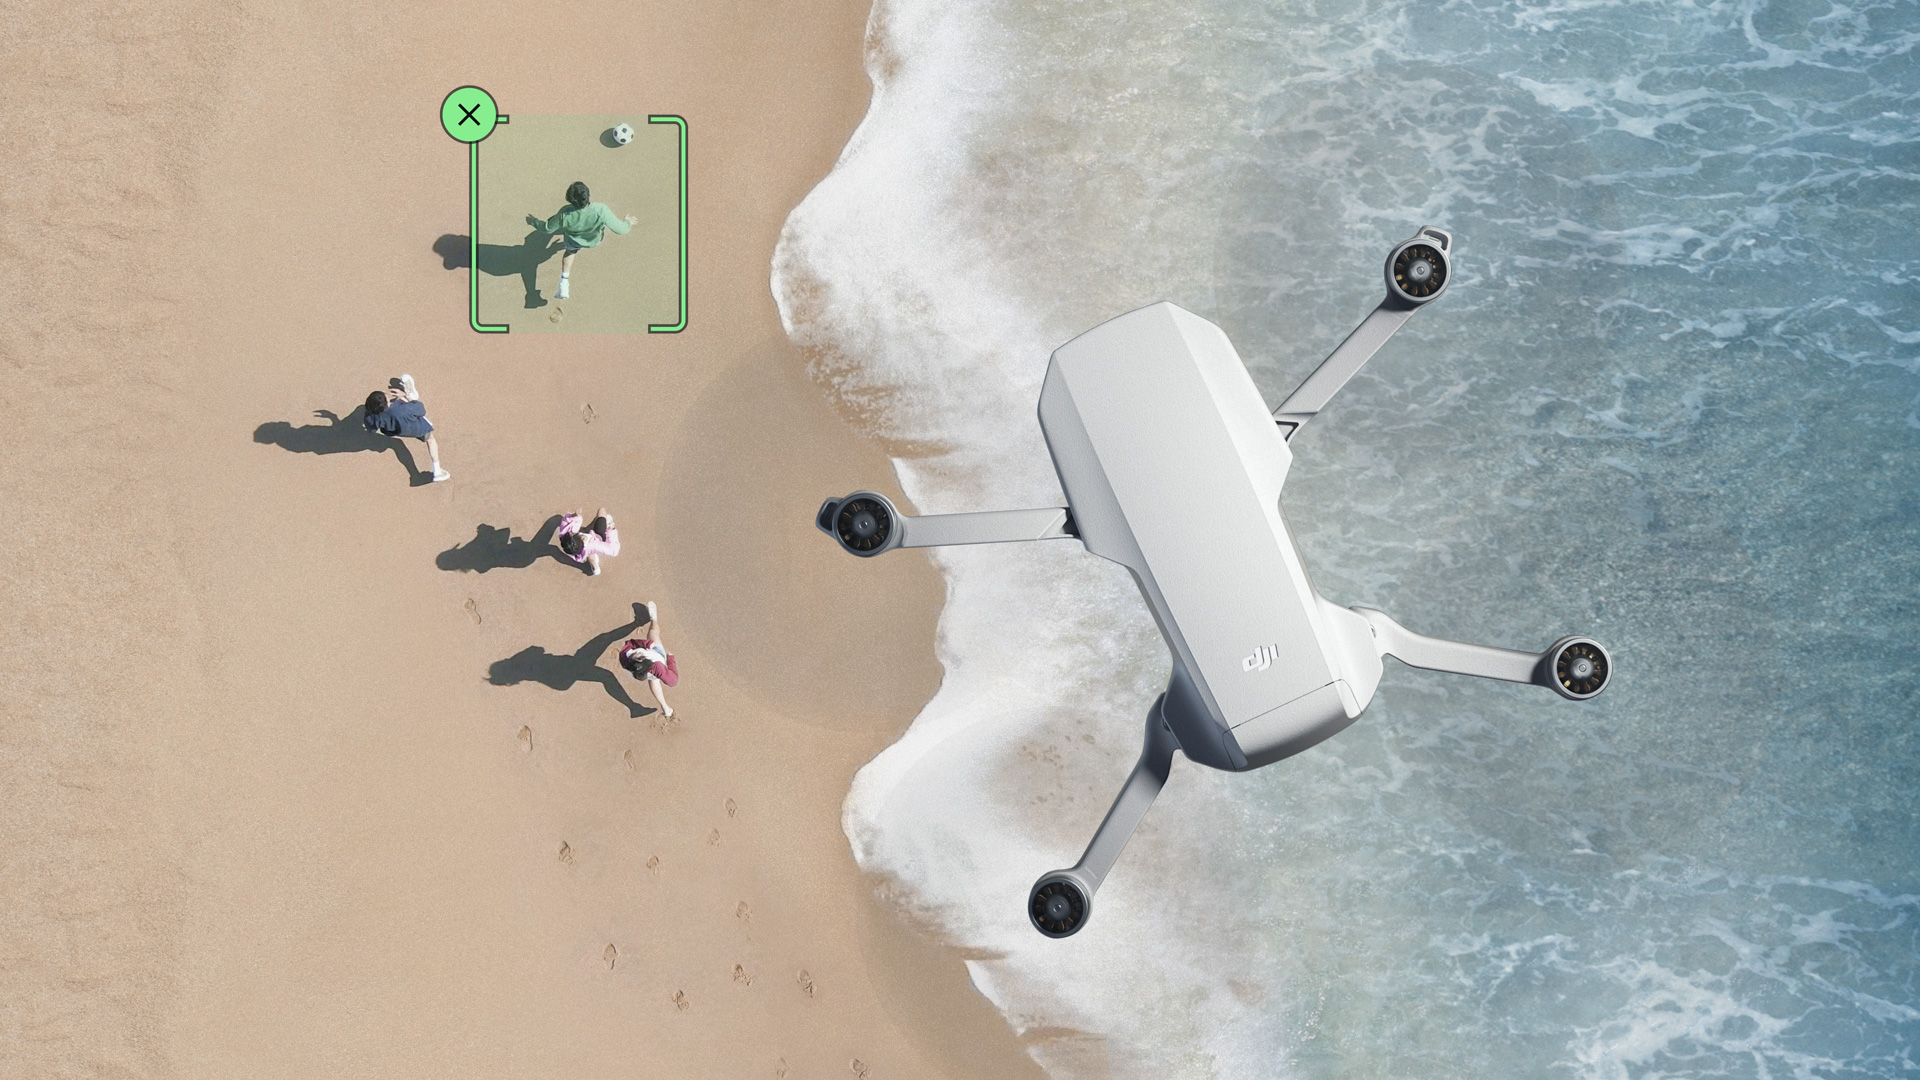 DJI Mini 4K subject tracking above people on a beach